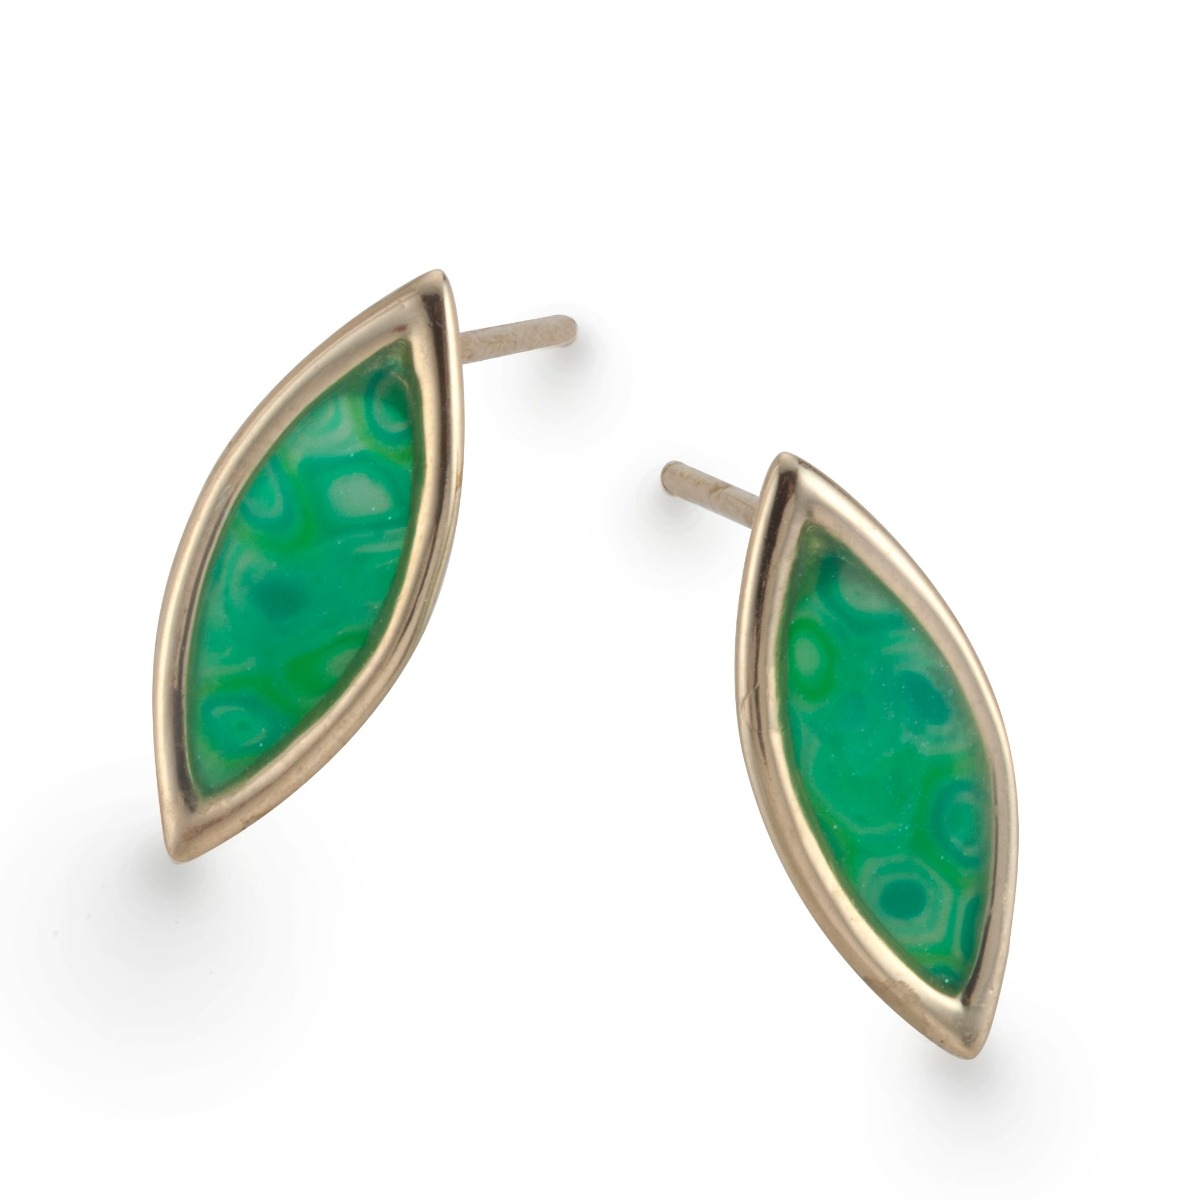 Adina Plastelina 24K Gold Plated Sterling Silver Olive Leaf Stud Earrings – Translucent Jade - 1